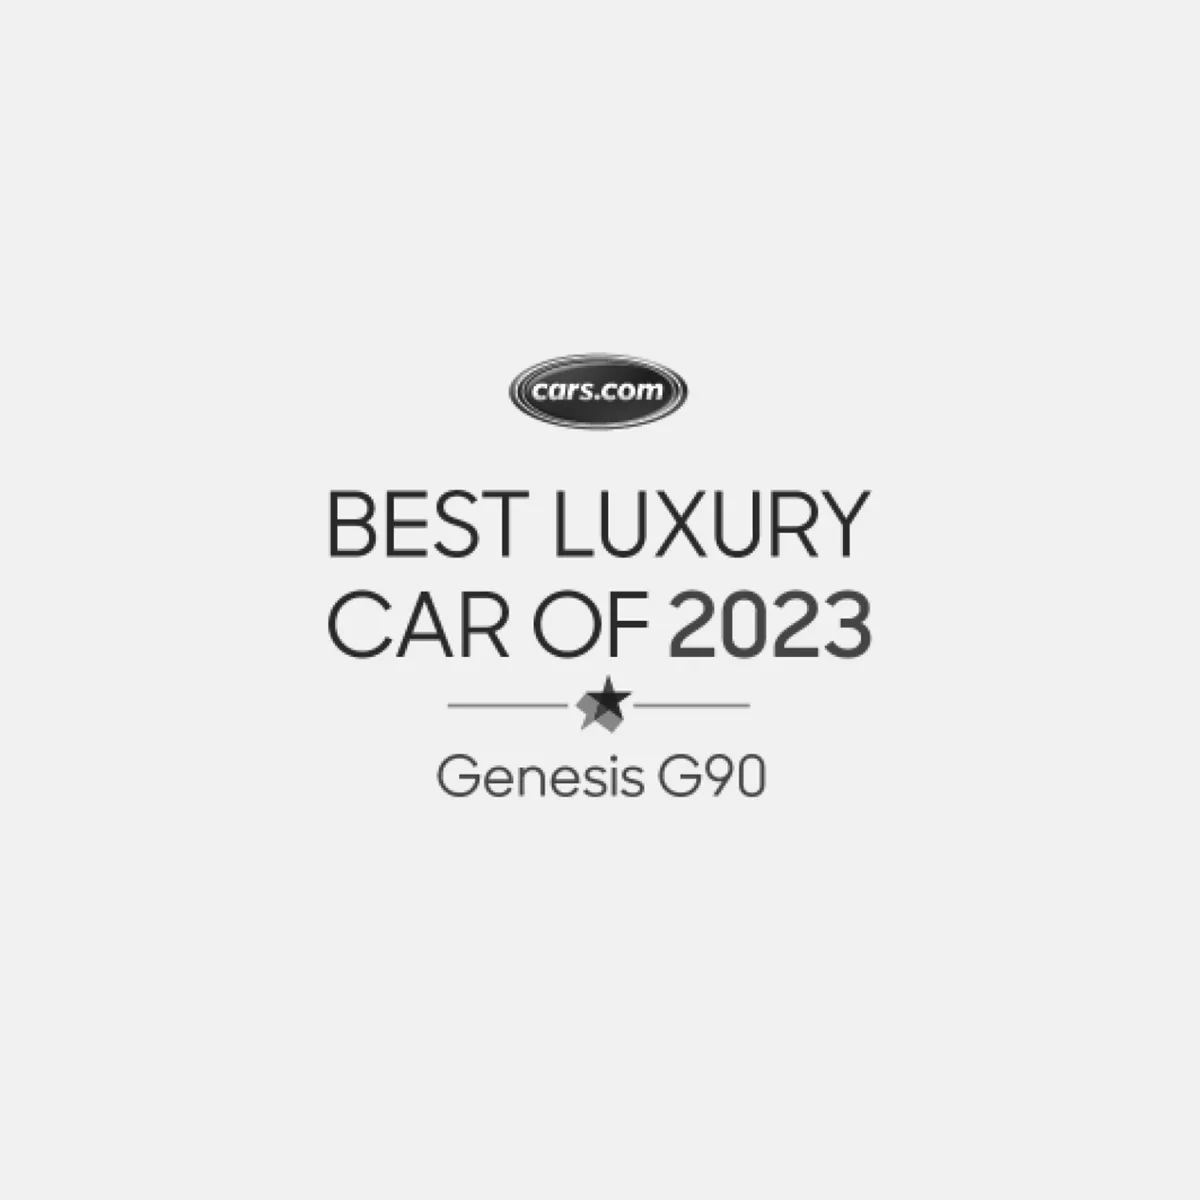 Cars.com 2023 年最佳豪華車款 Genesis G90。